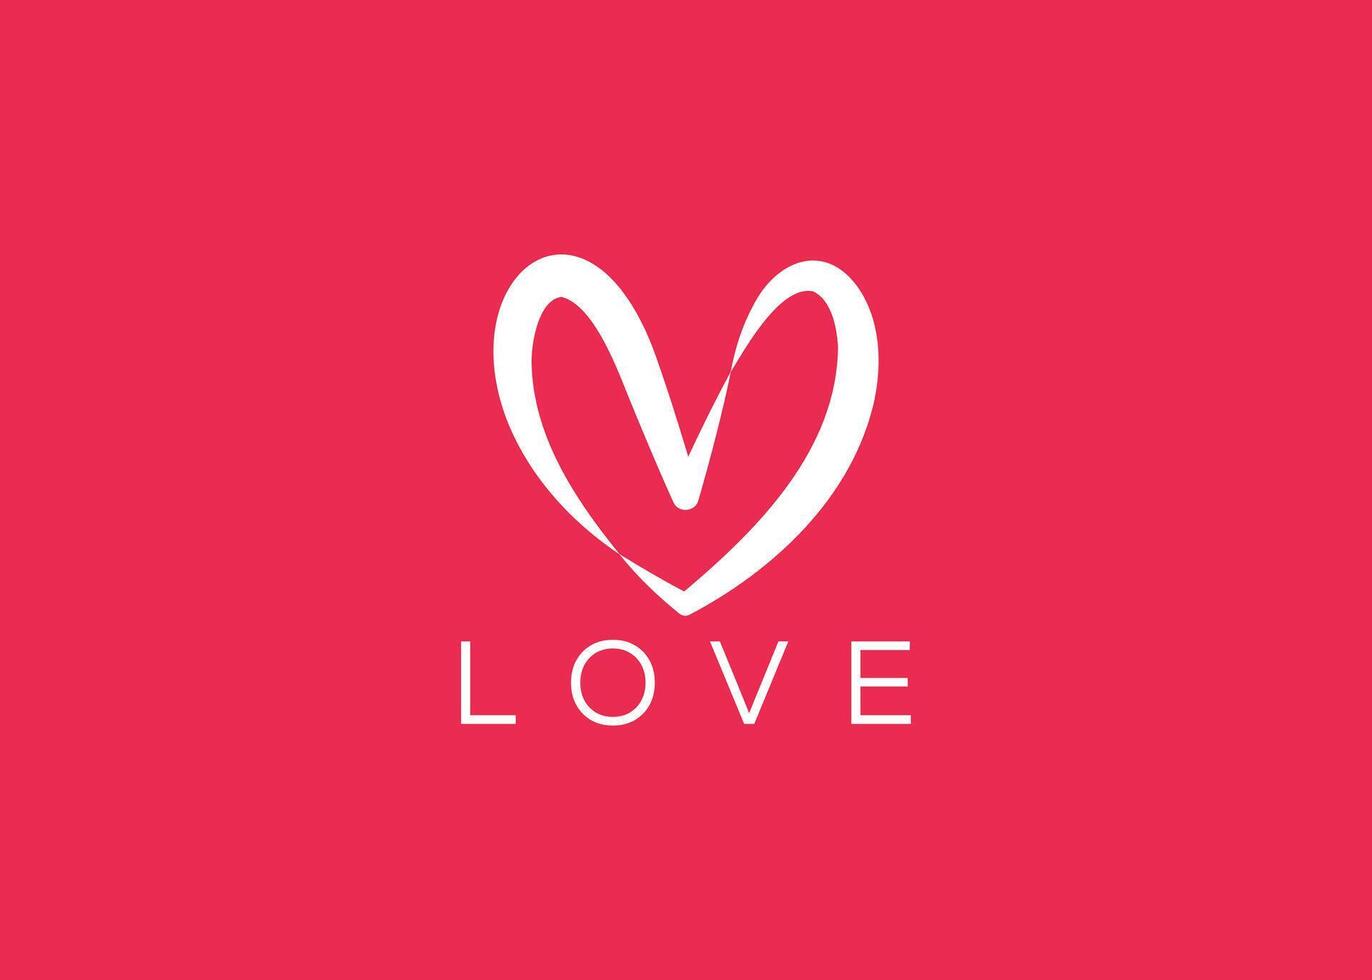 minimalista amor logo diseño vector modelo. creativo rojo corazón forma logo